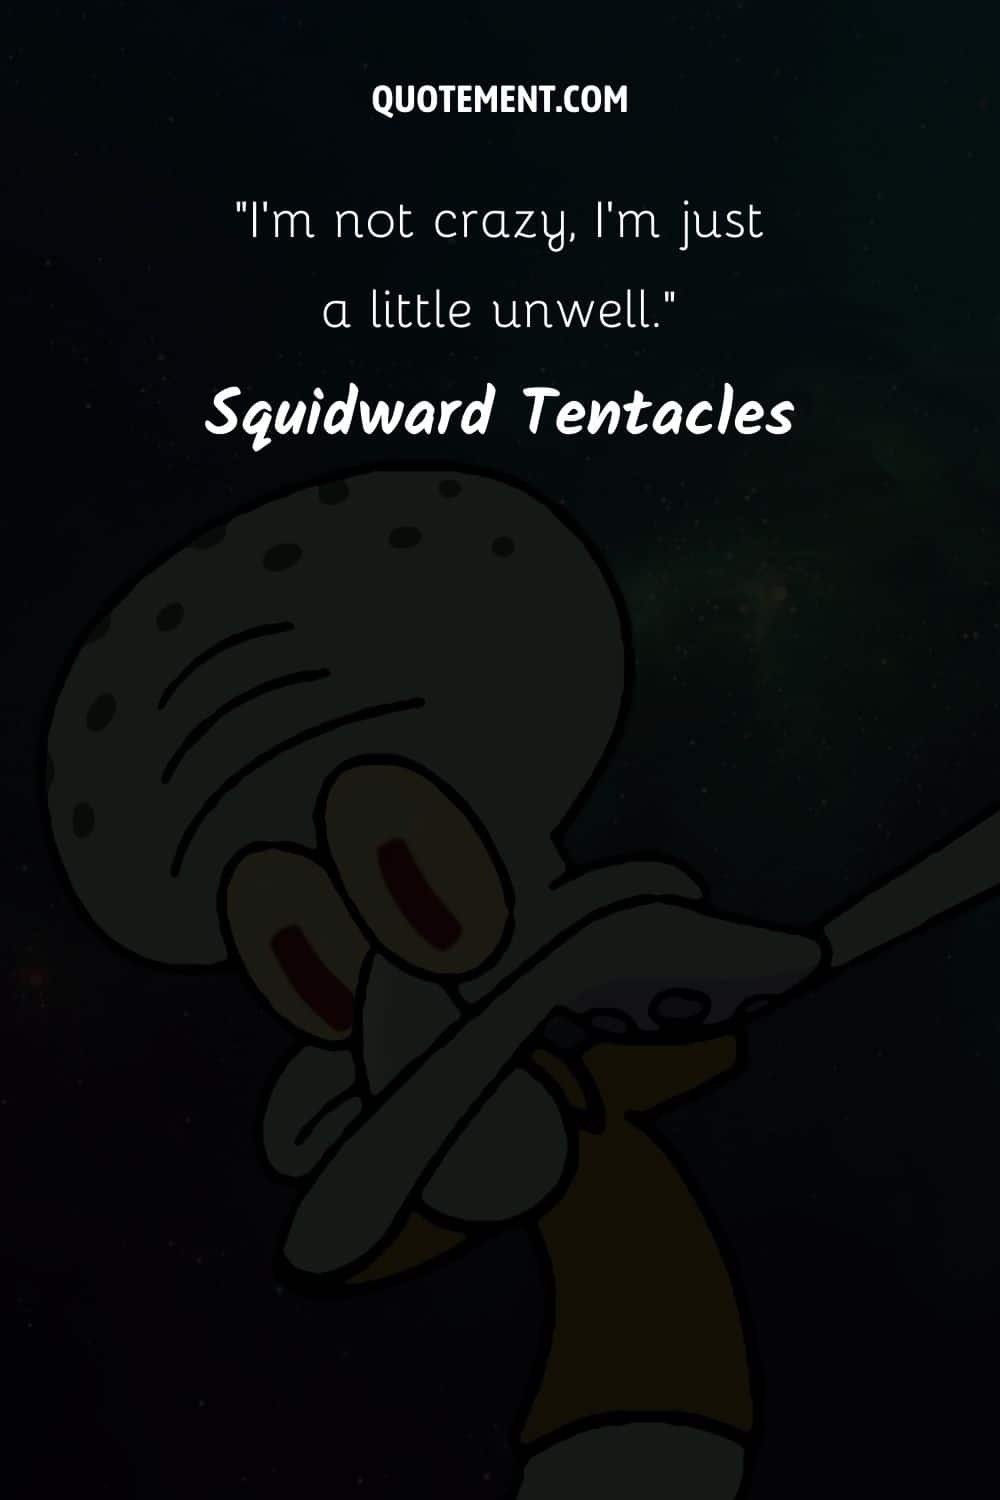 Squidward Tentacles dancing illustration